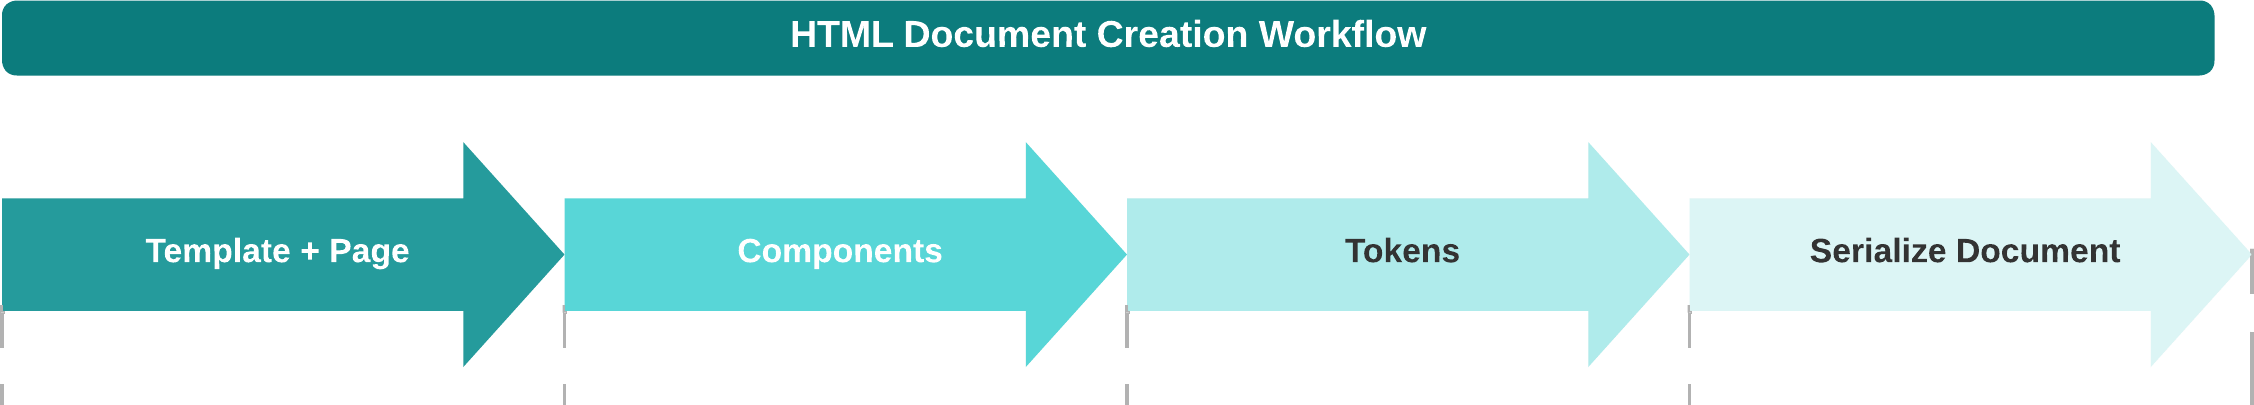 HTML Document Creation Workflow